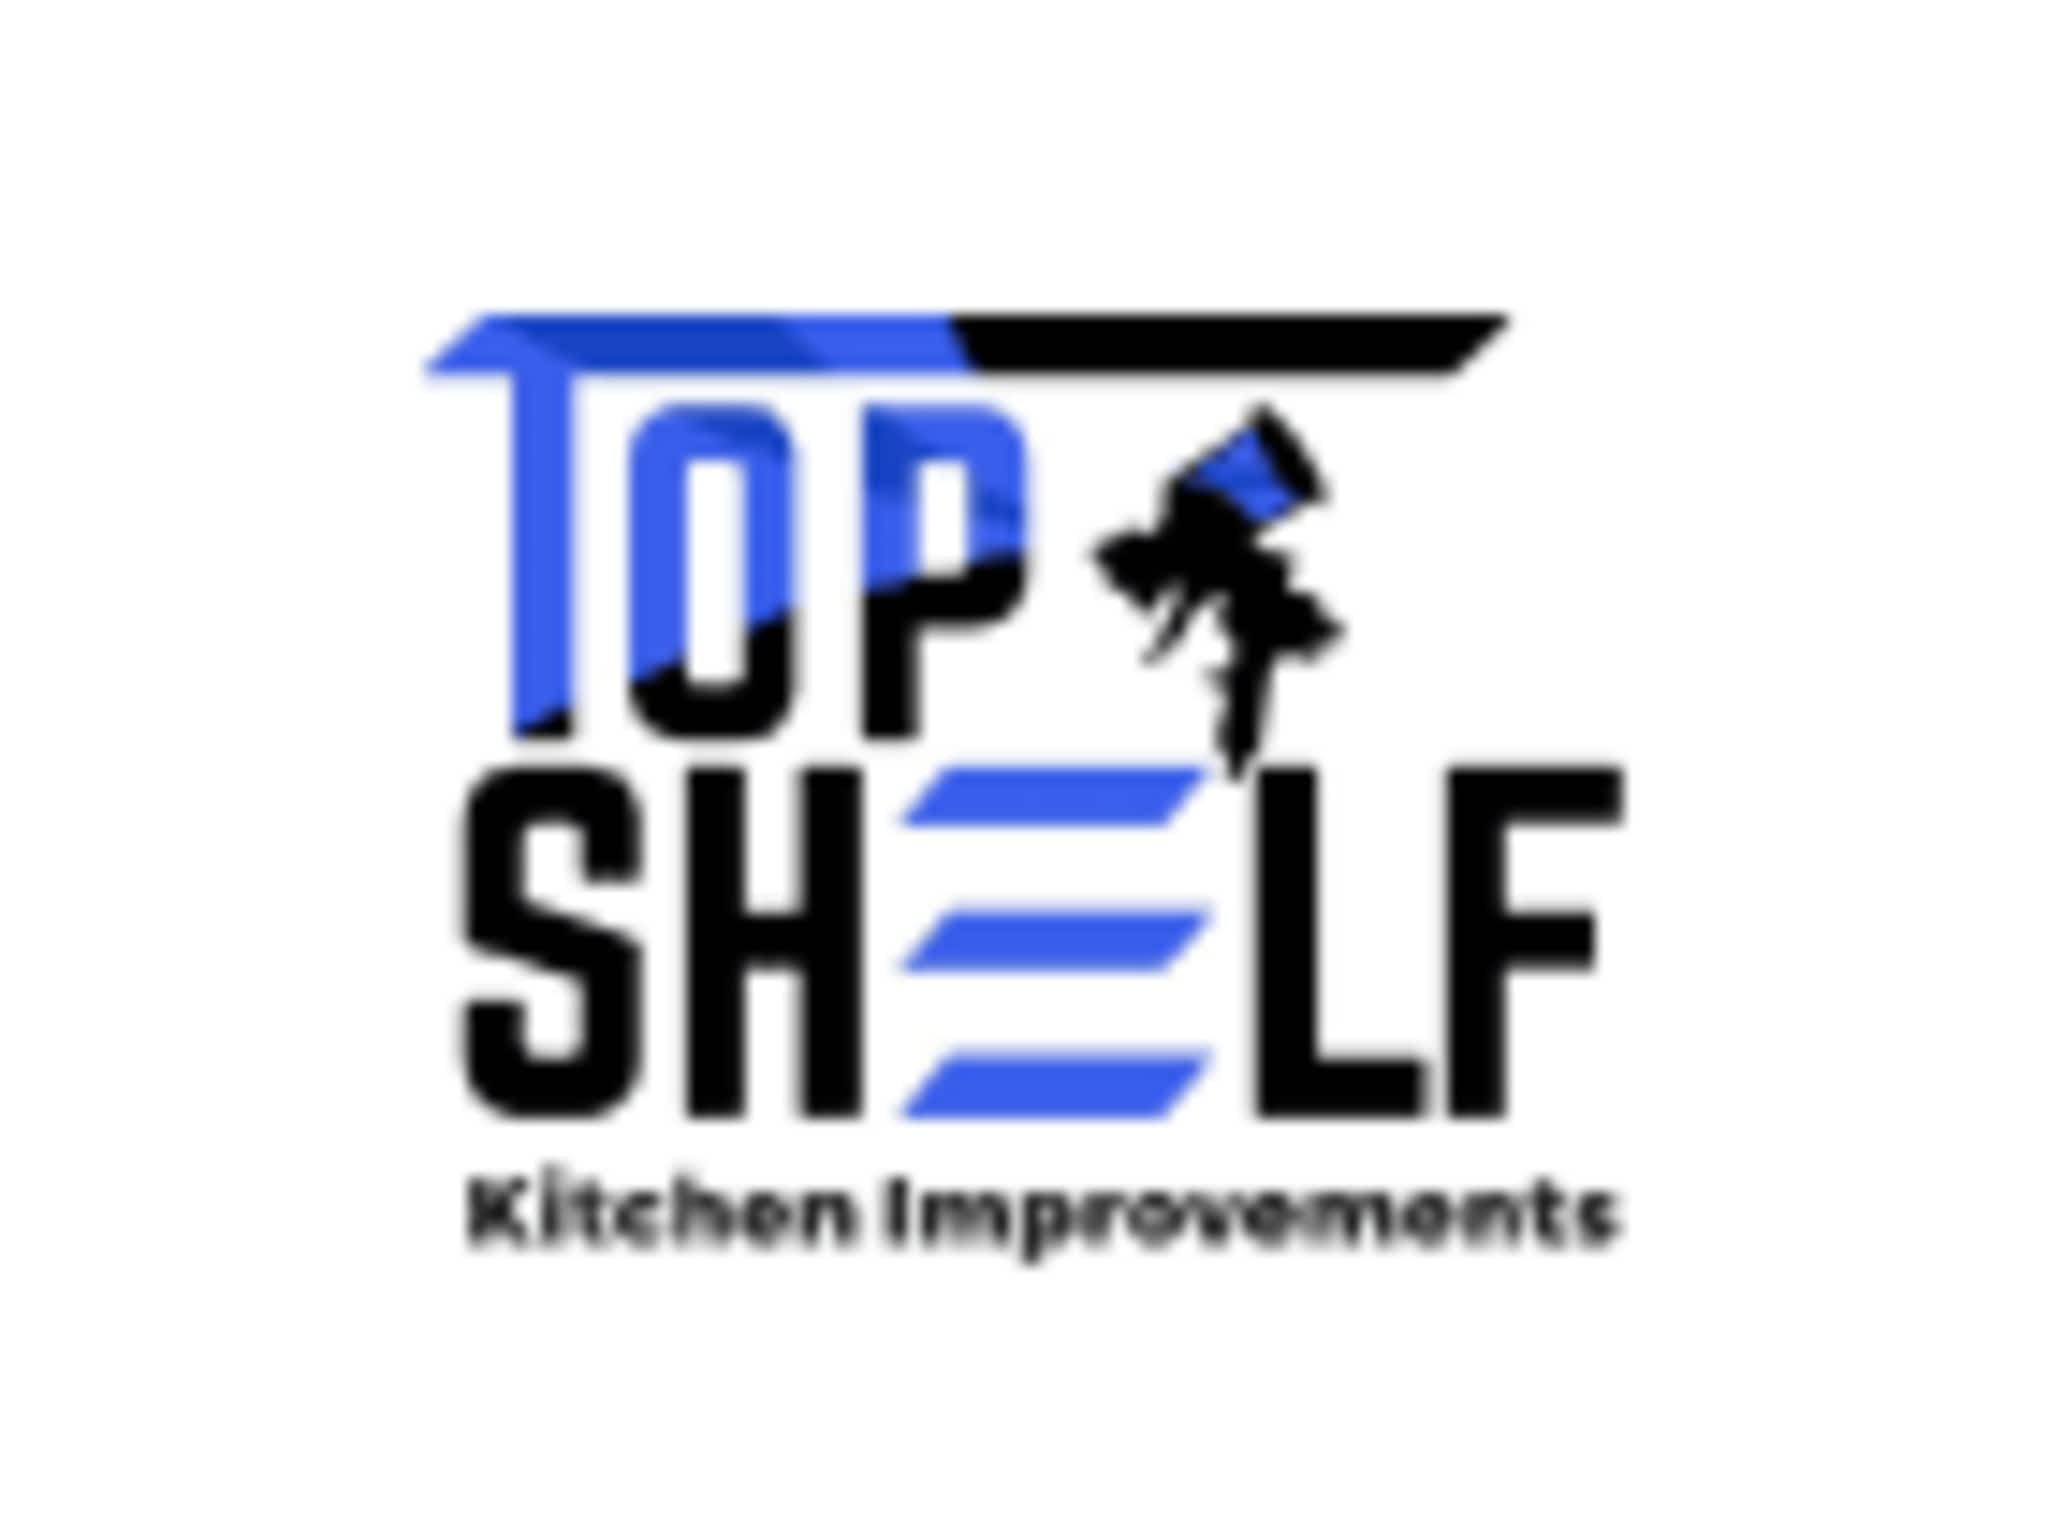 photo Top Shelf Kitchen Improvements